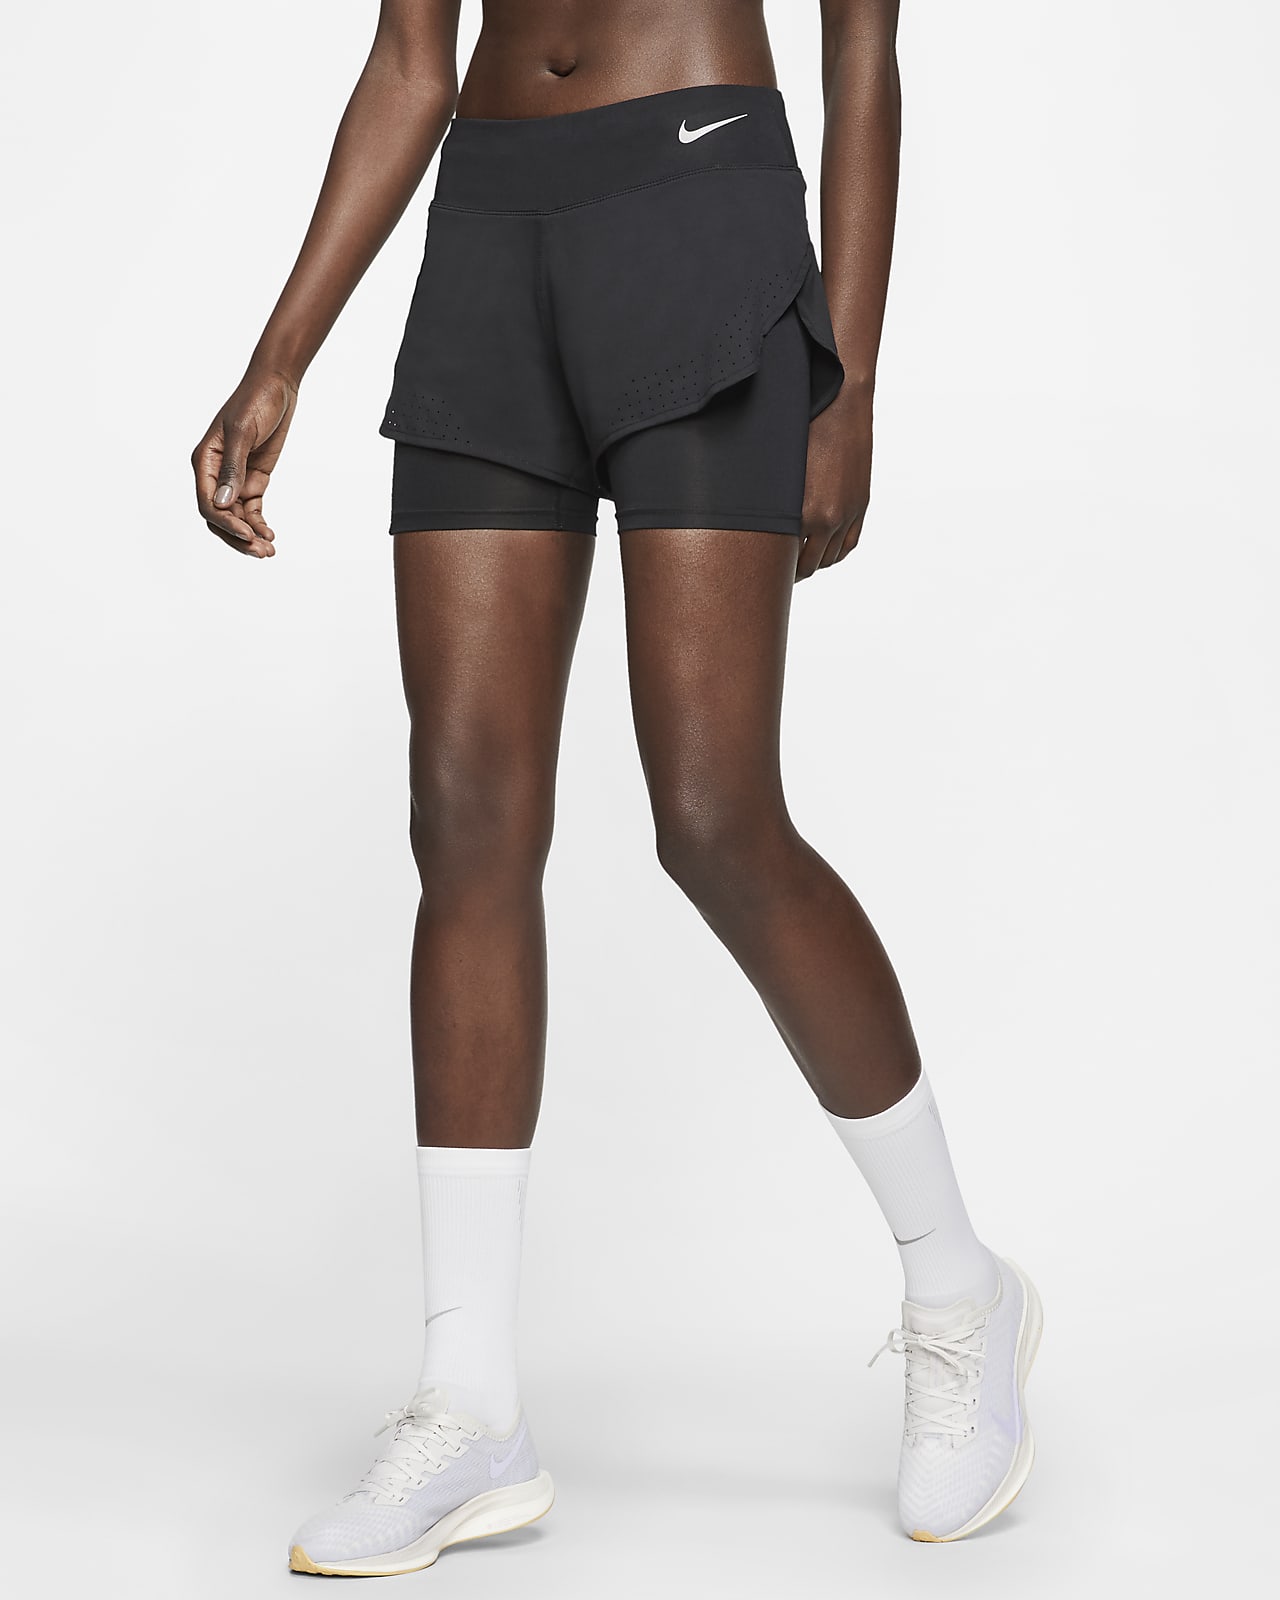 nike eclipse women's running shorts